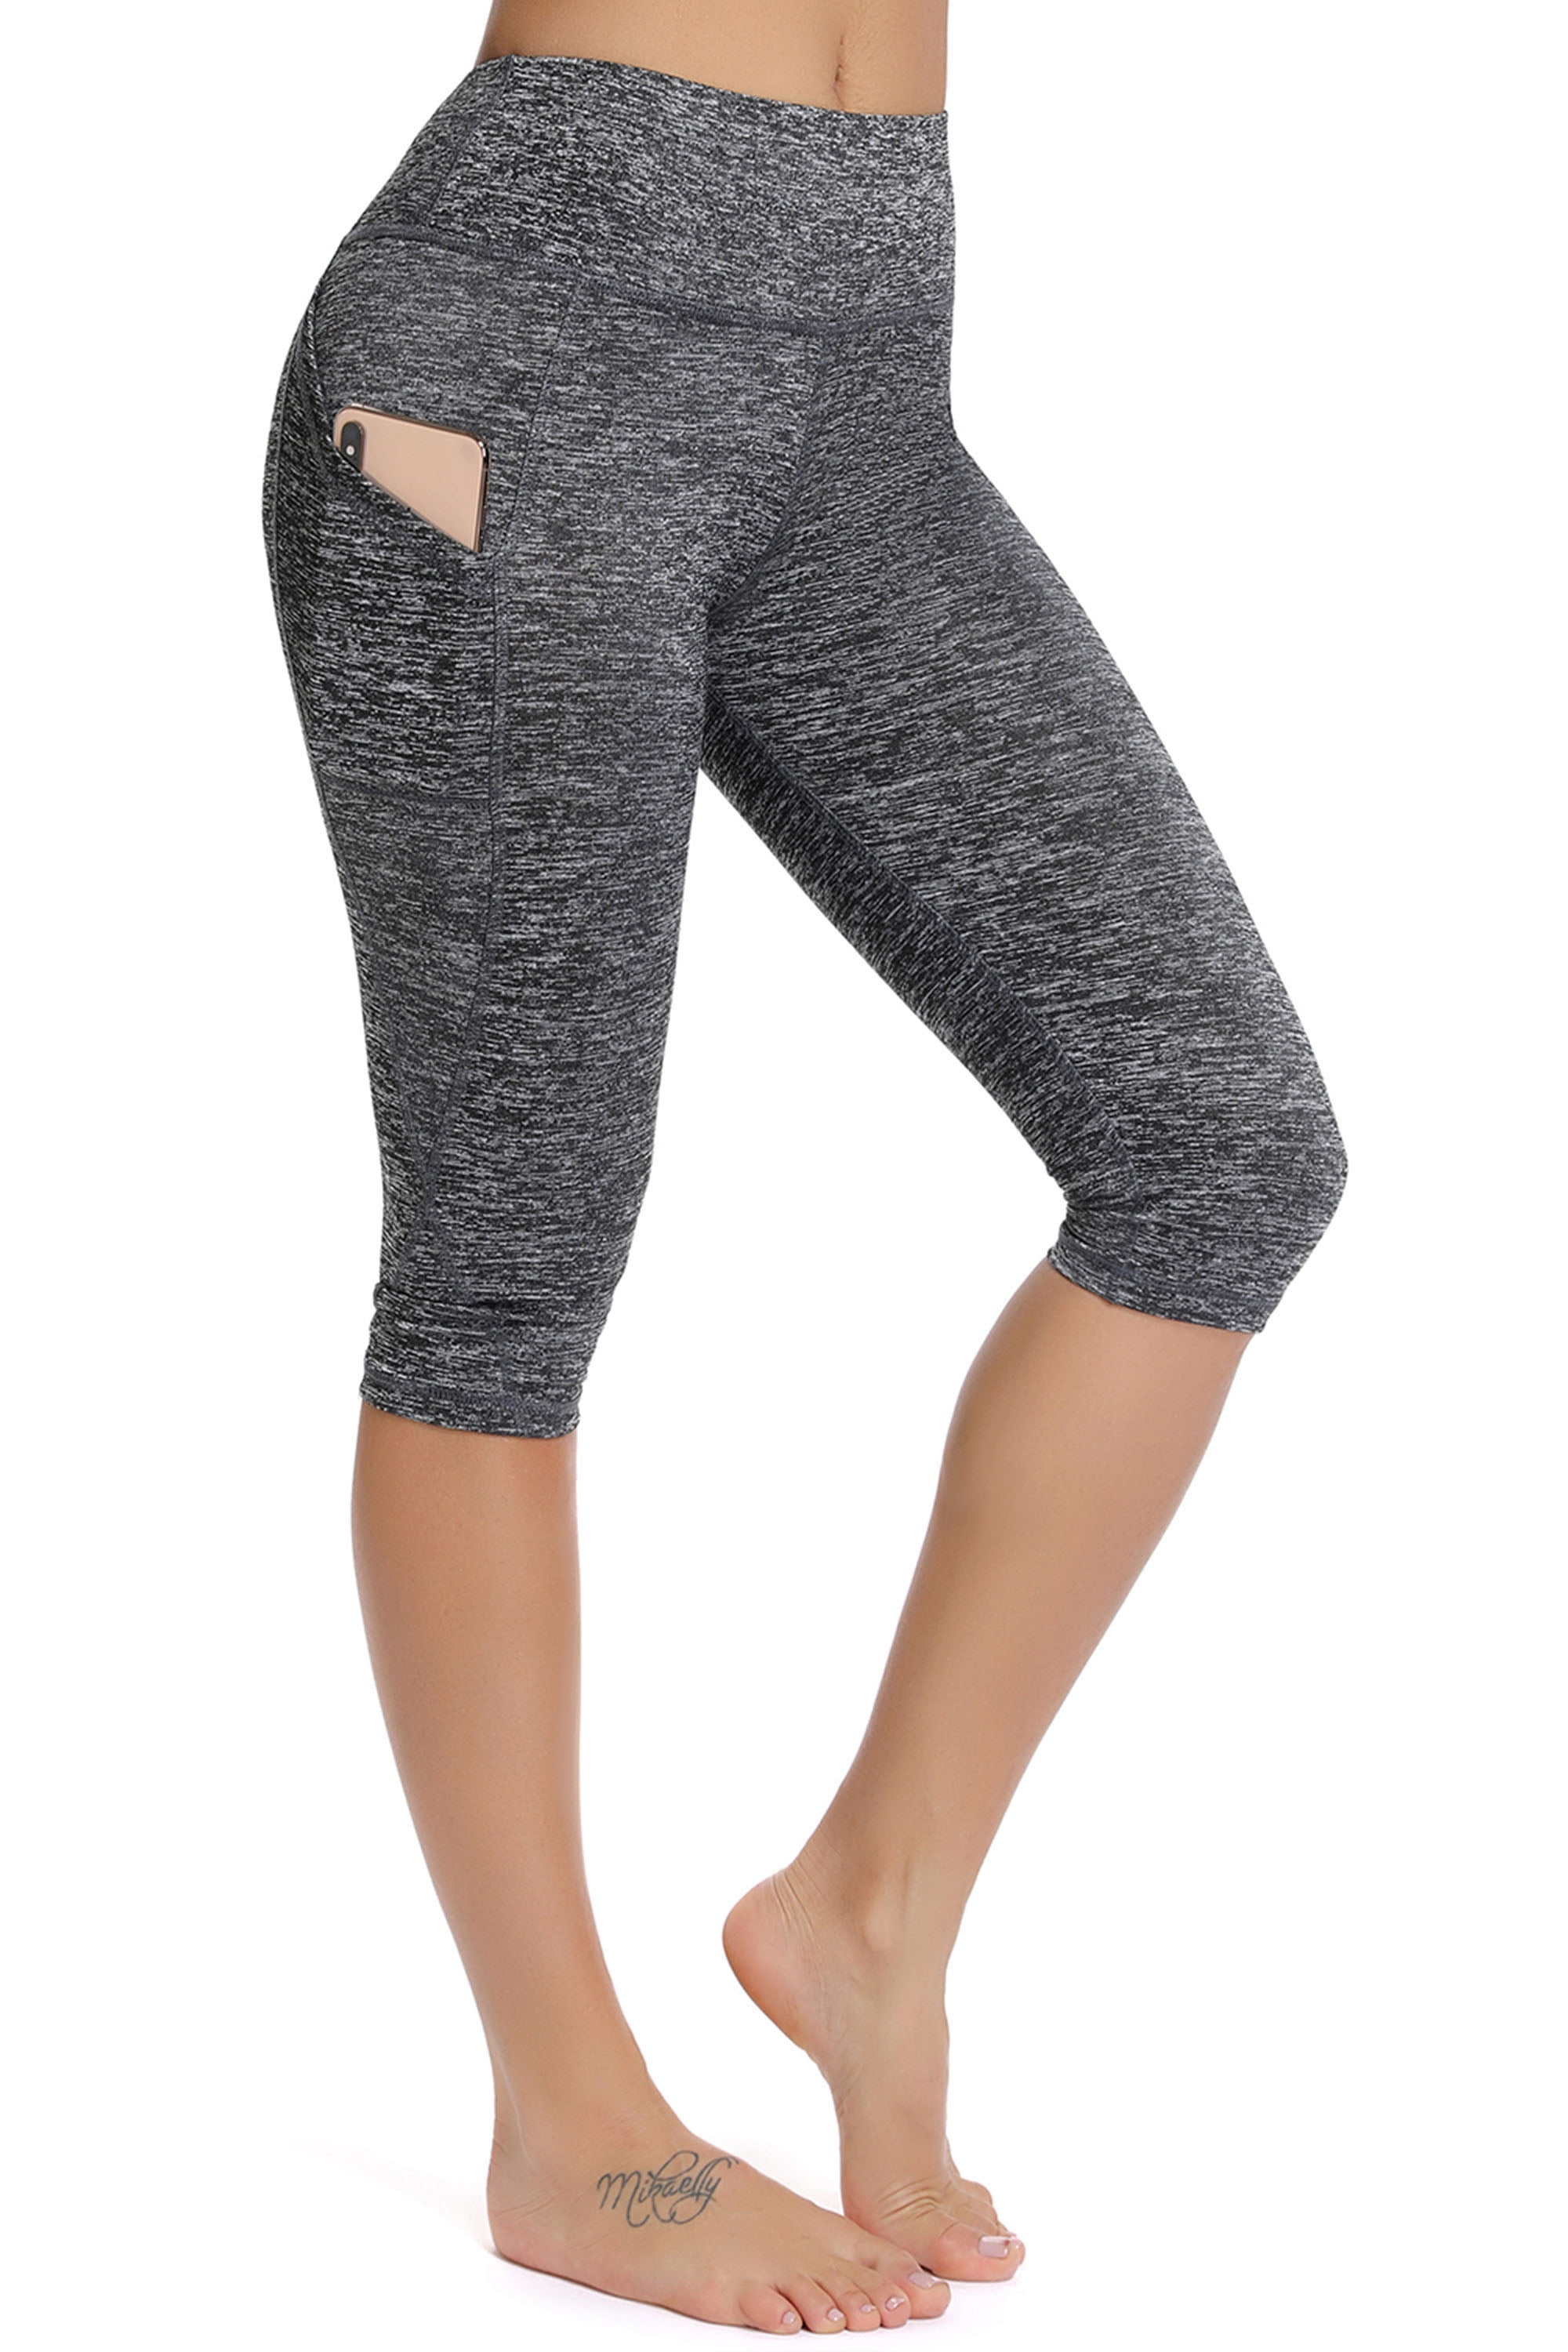 Women Workout Running Capris Leggings Pocket Tummy Control High Waist Yoga Pants 